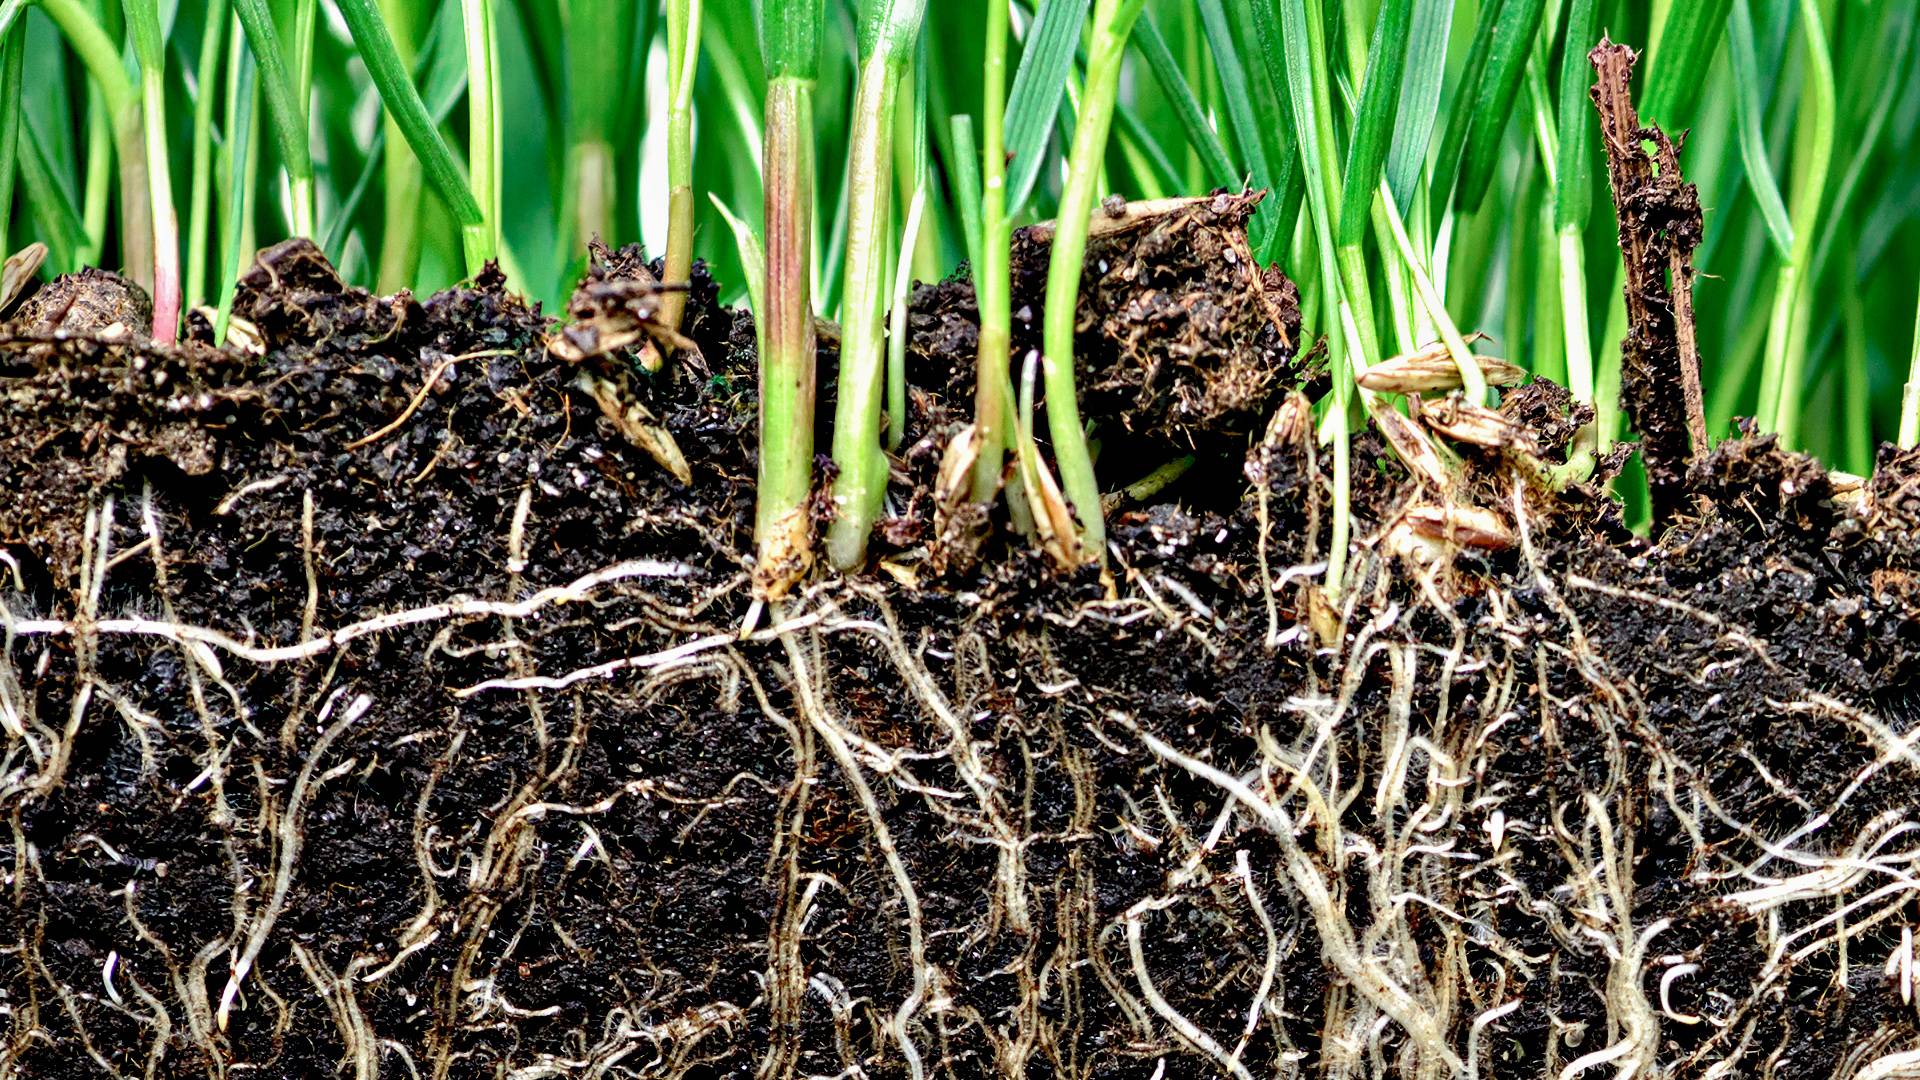 Roots of green plants intertwined in rich moist soil